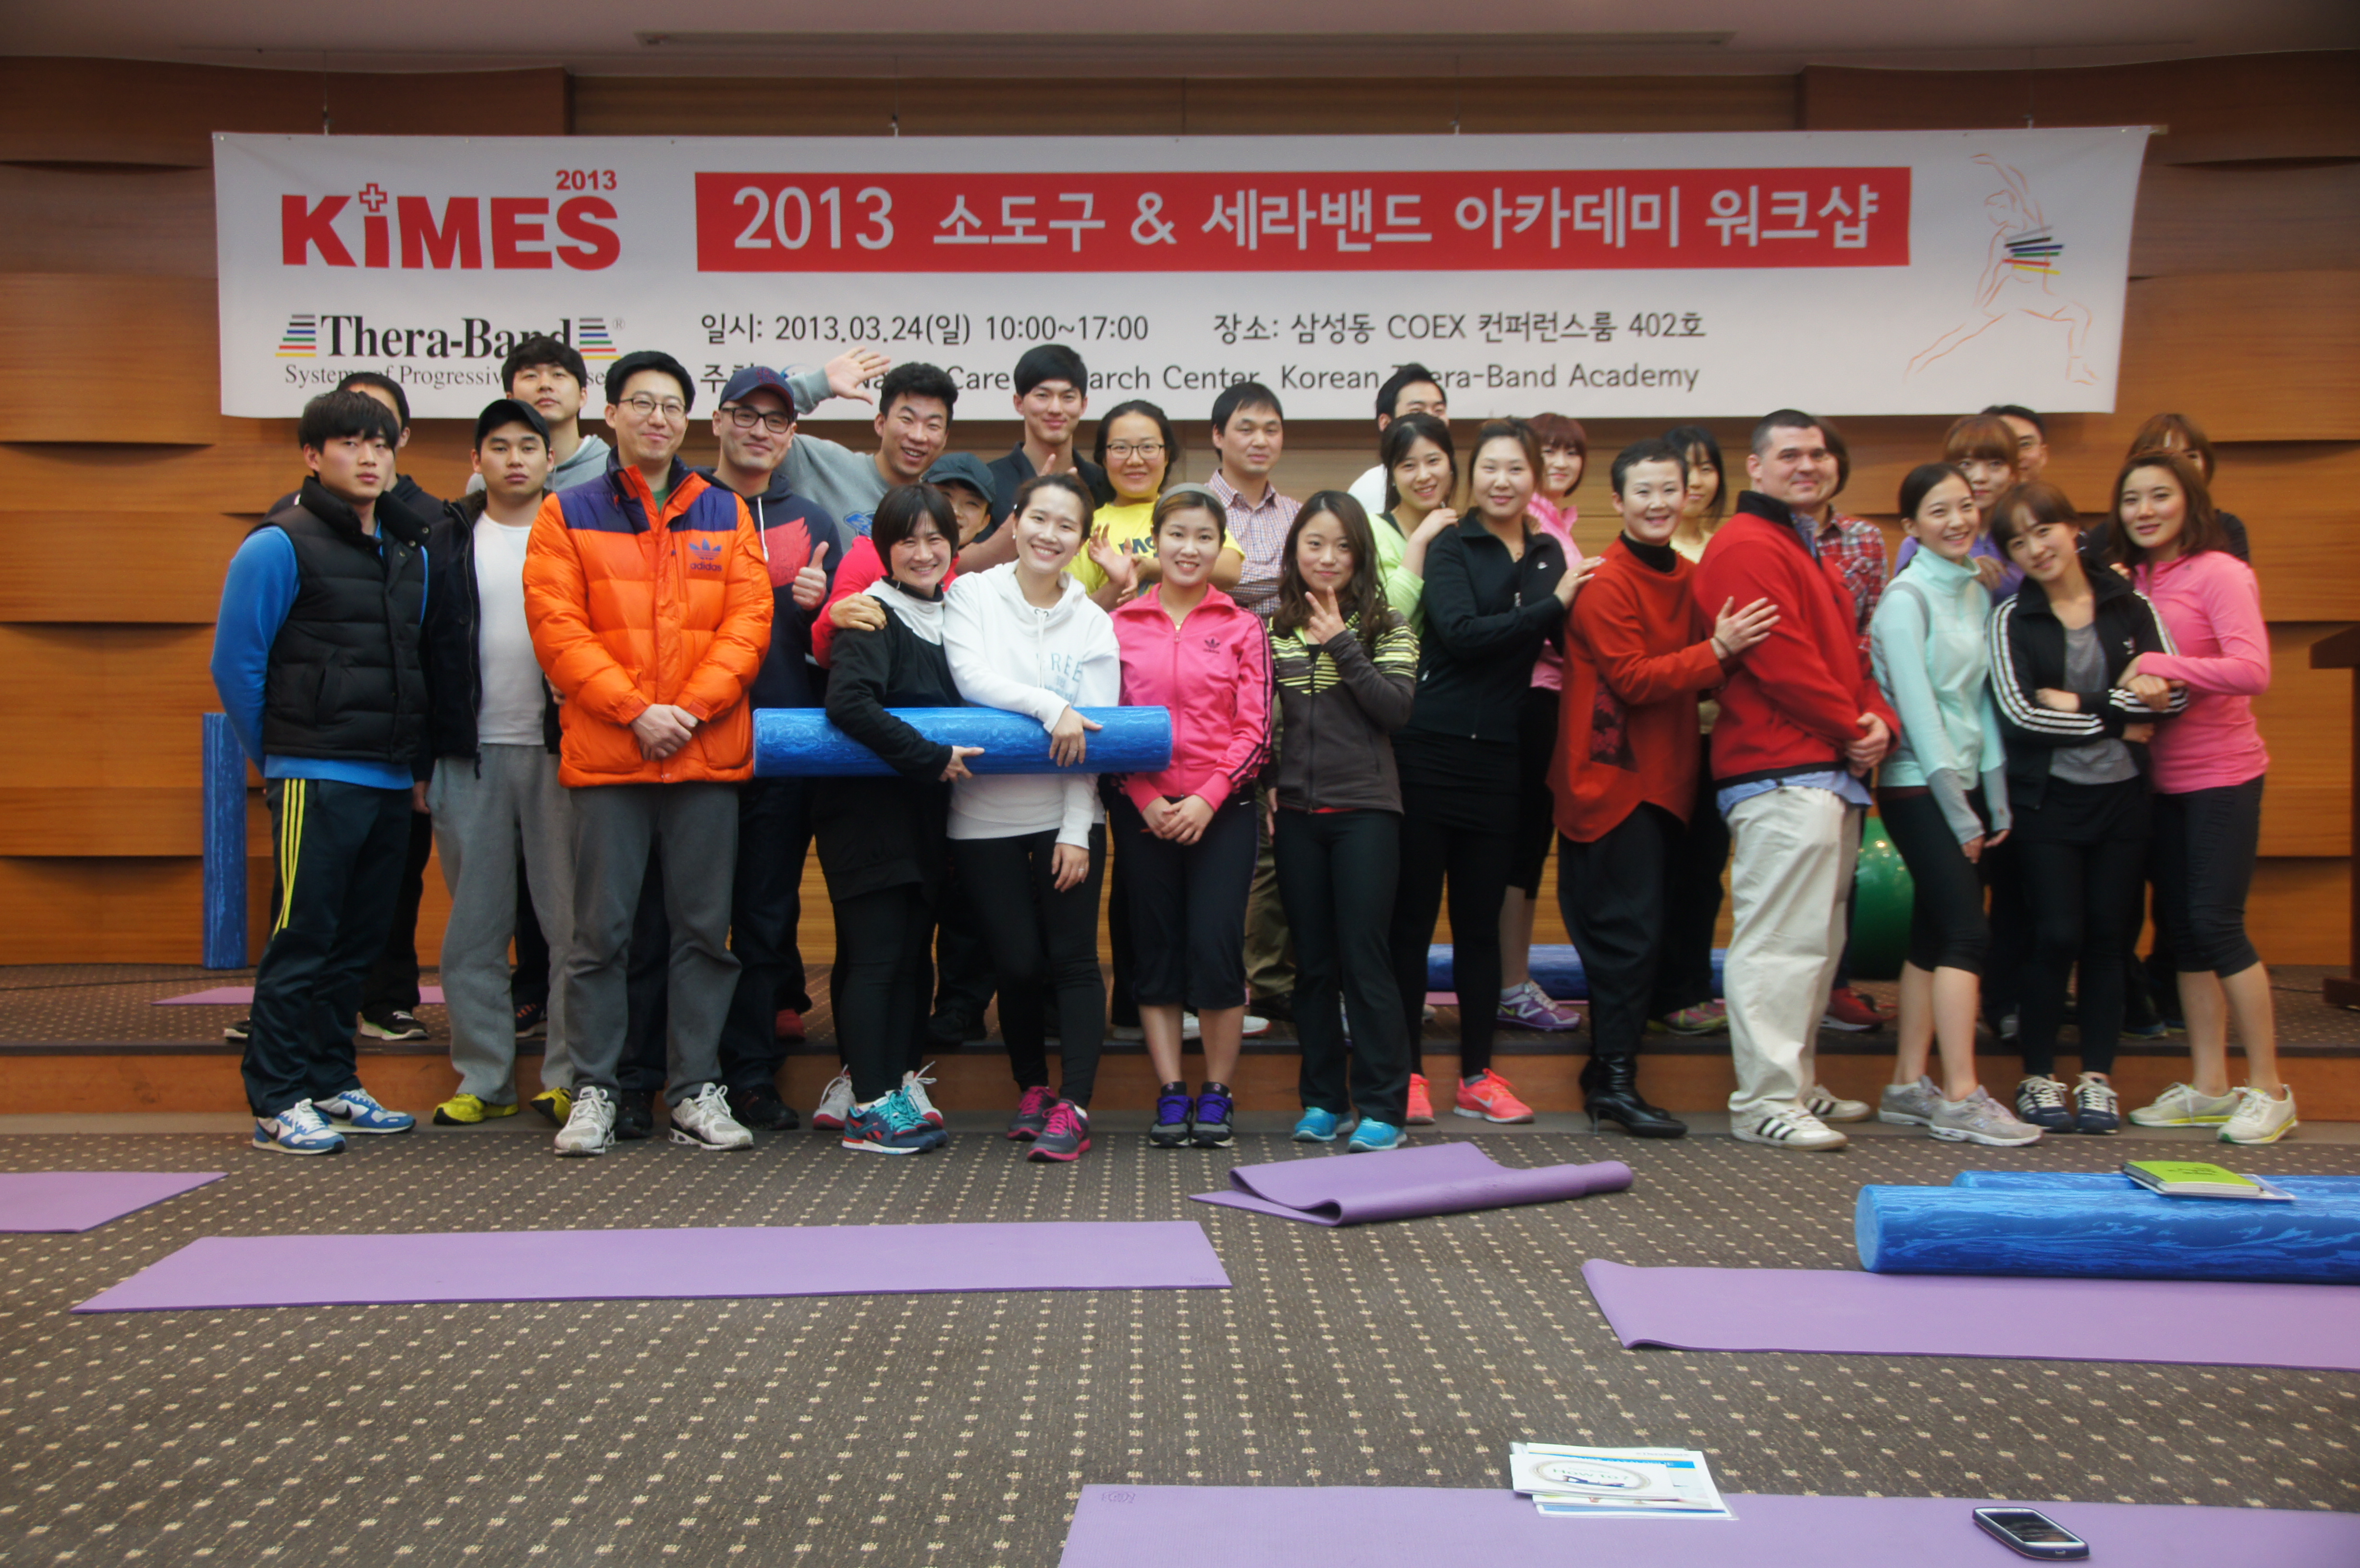 2013 KIMES 10년 연속 참가!